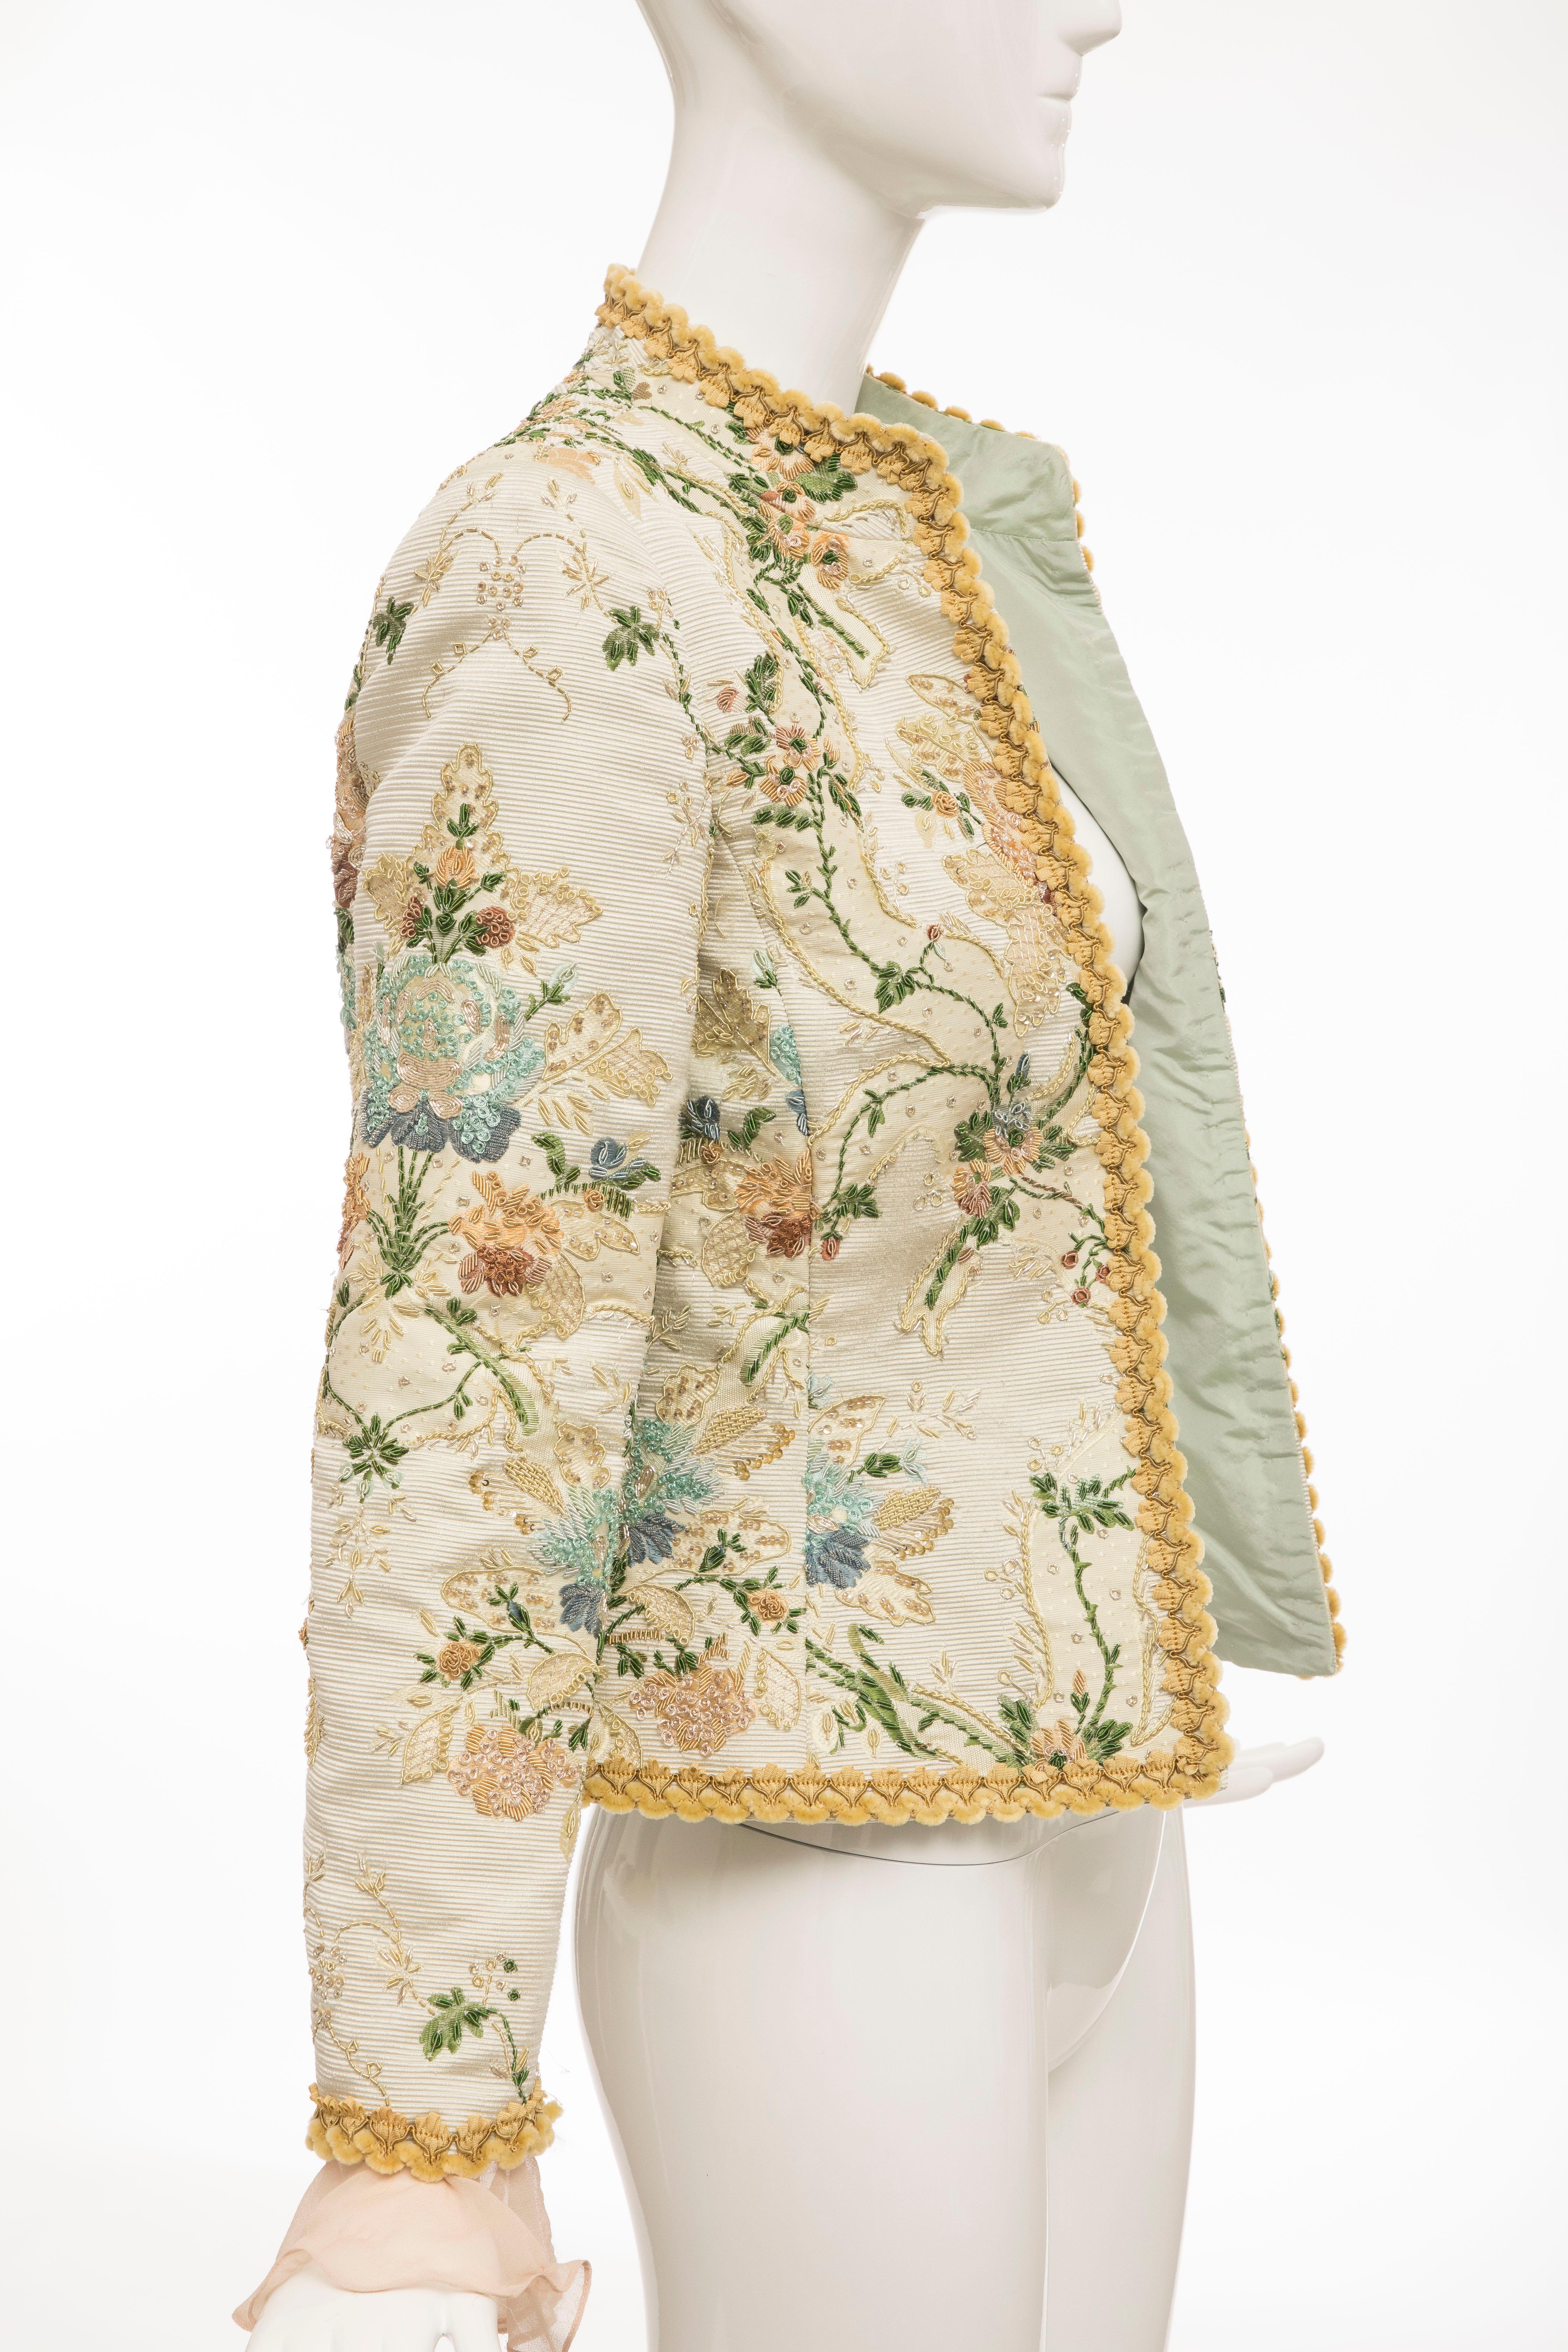 Oscar de la Renta Lesage Embroidered Evening Jacket, Circa: 1990's For Sale 7